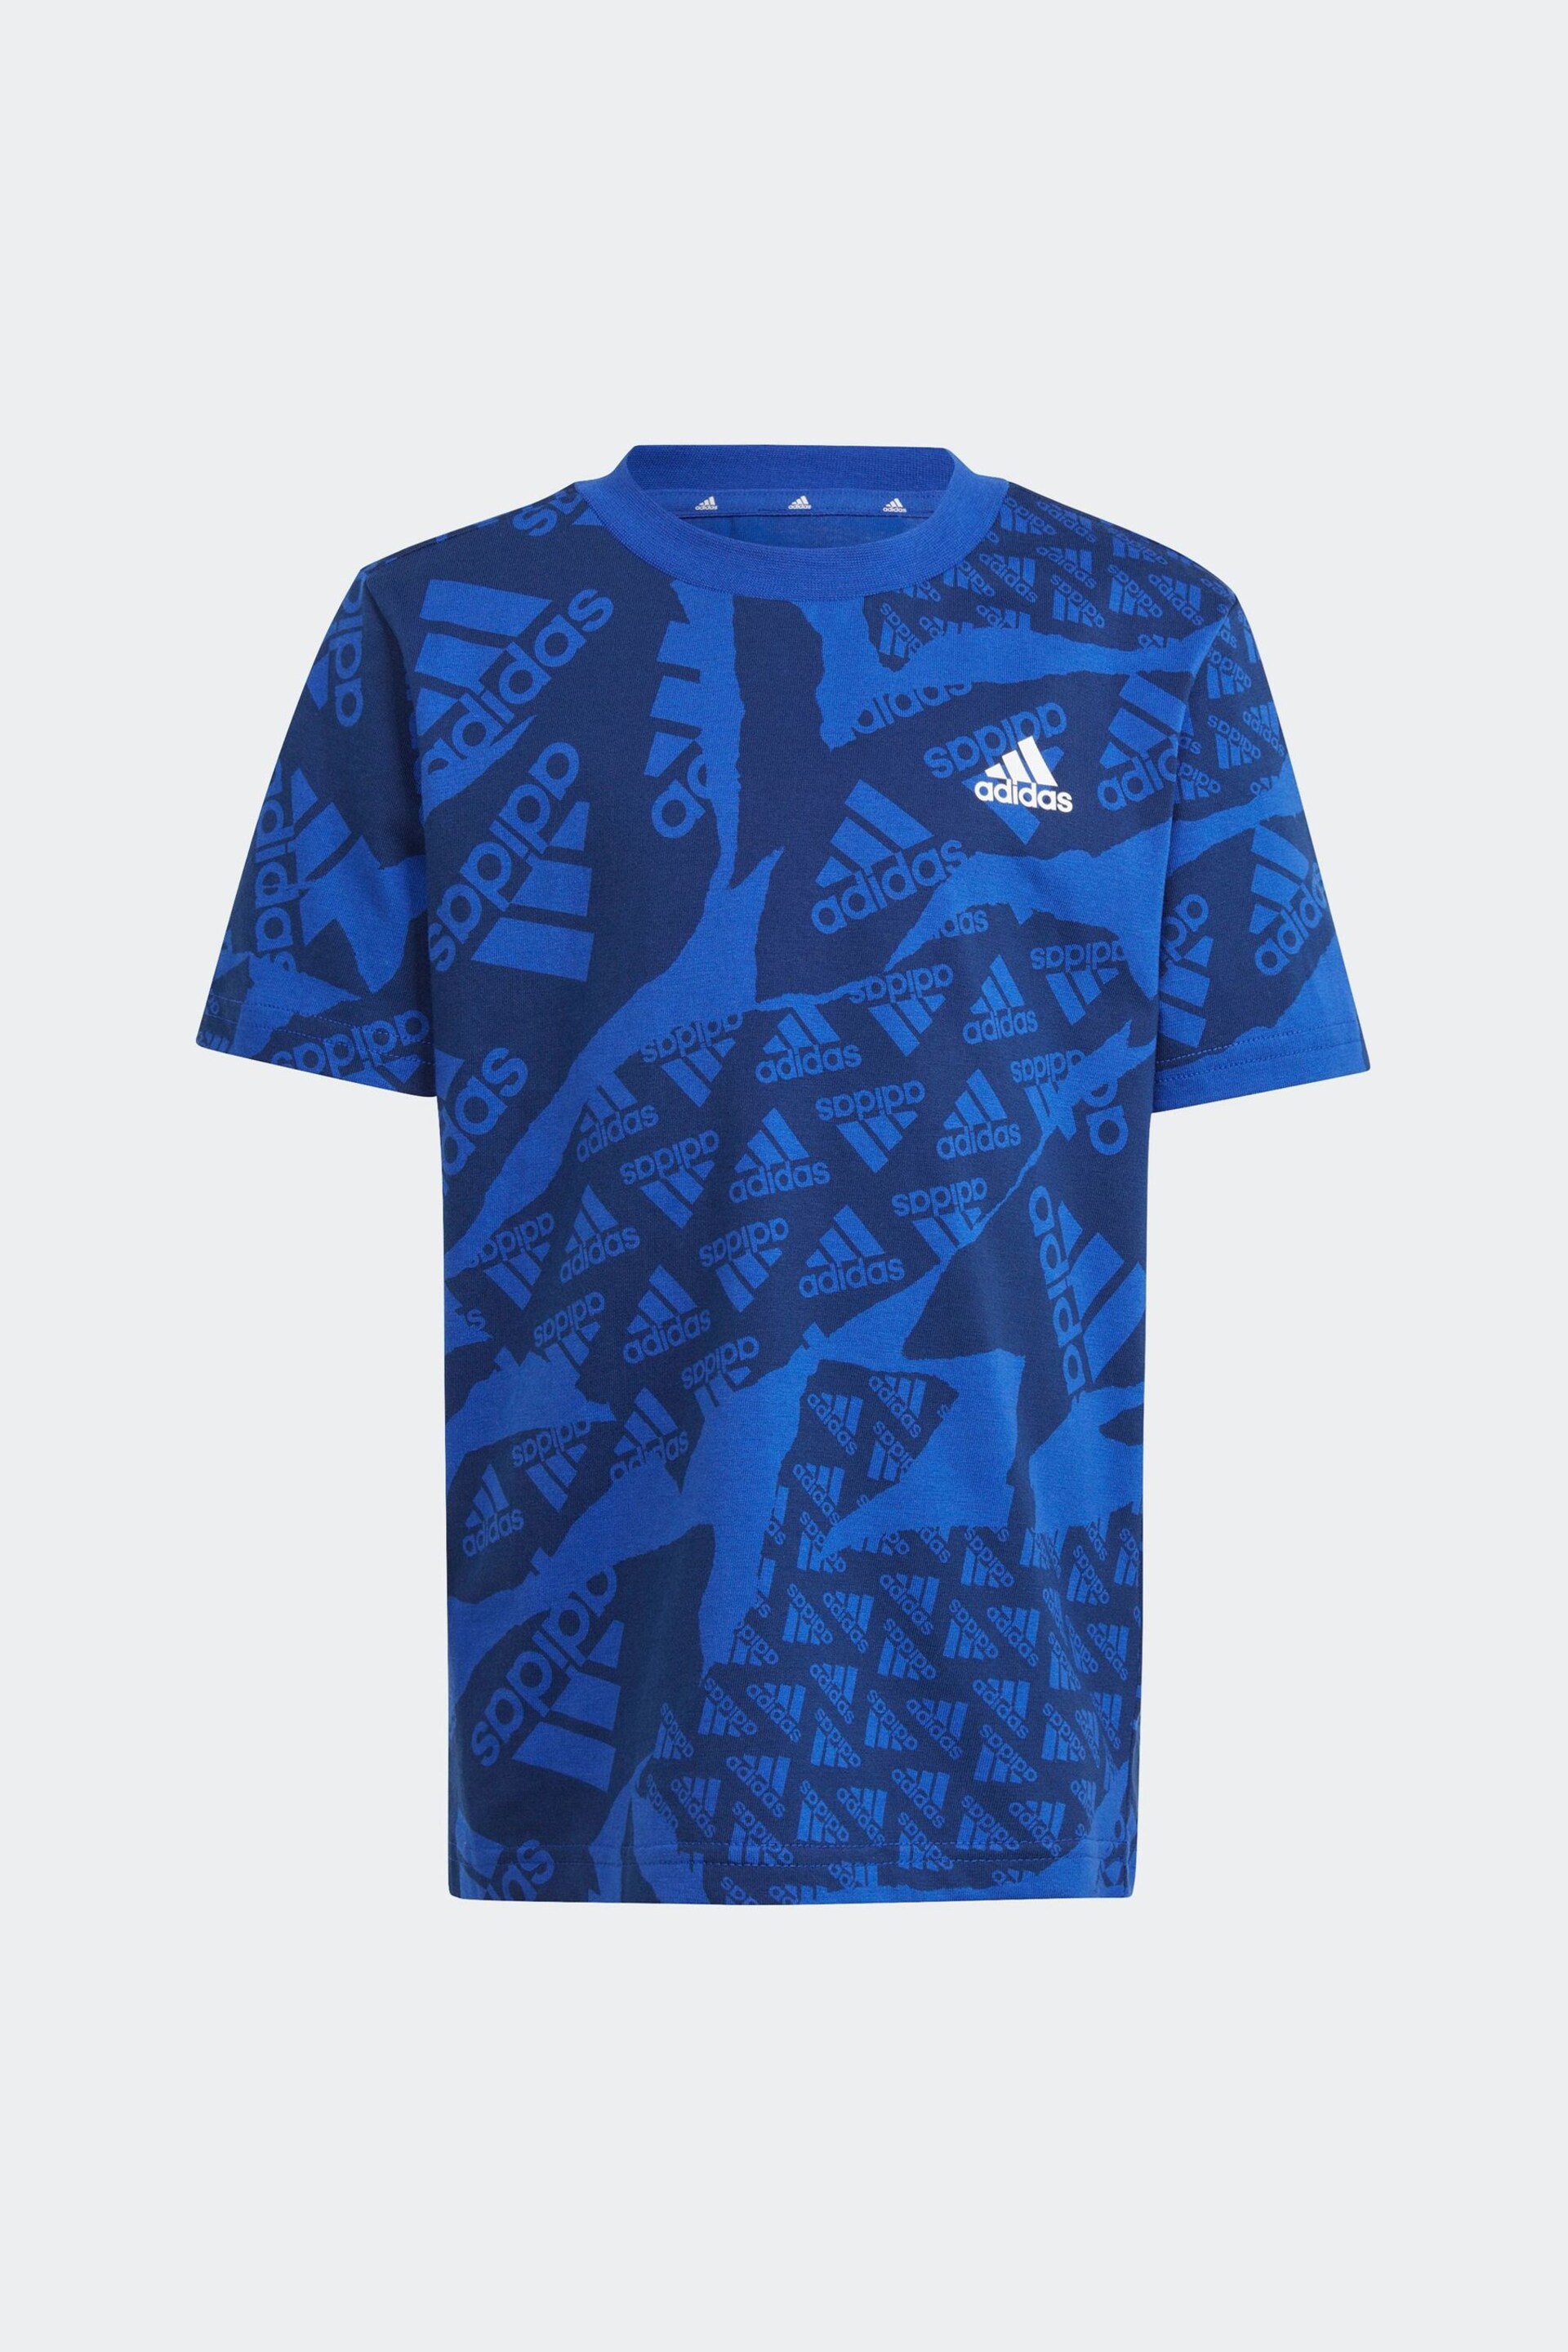 adidas Blue Sportswear Essentials Allover Print T-Shirt - Image 3 of 5